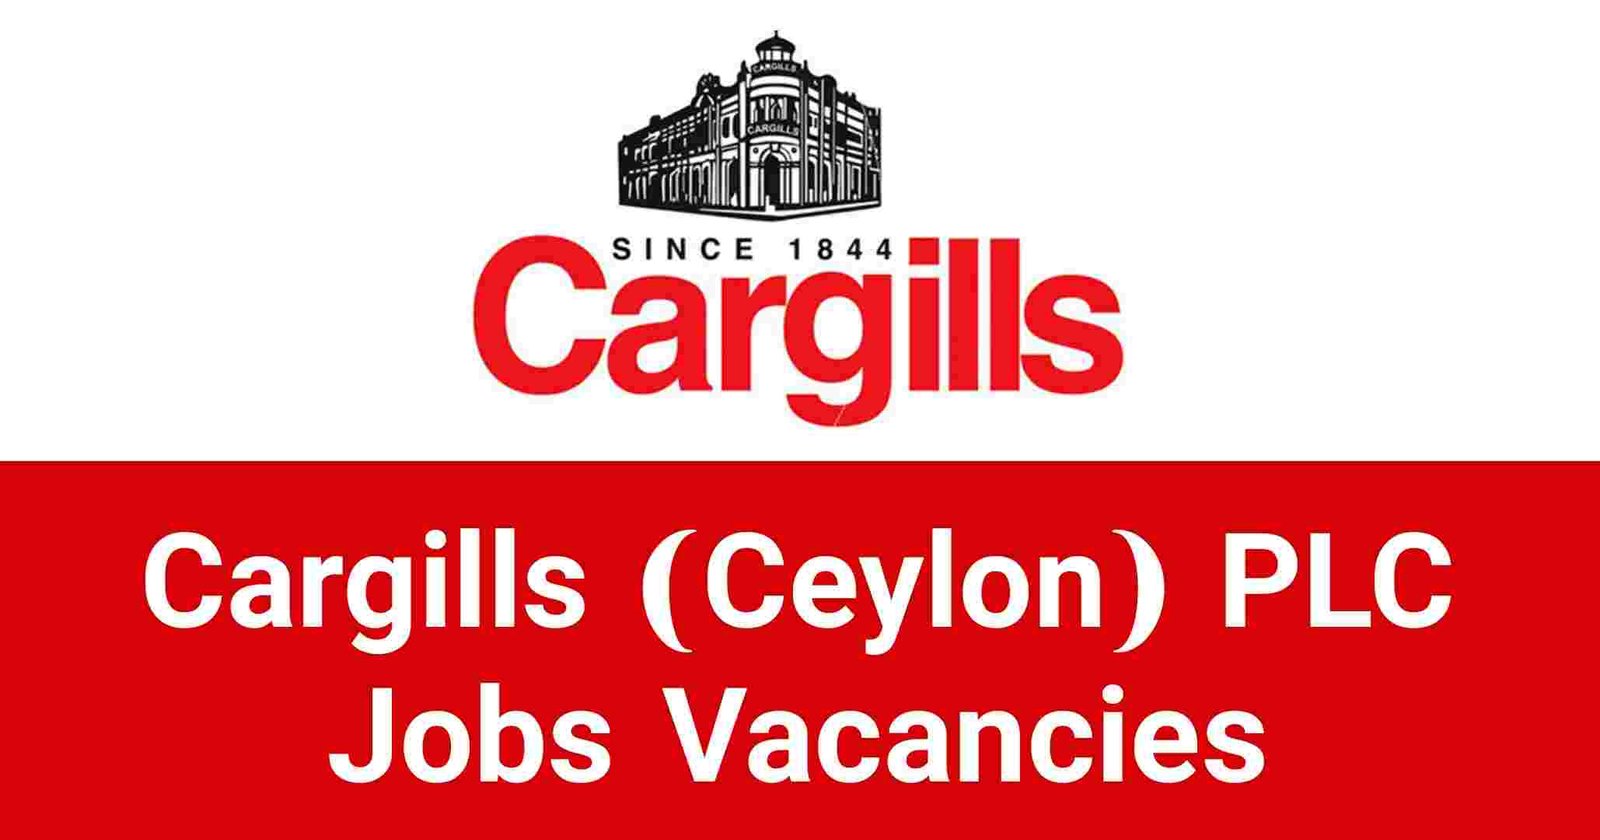 Cargills (Ceylon) PLC Jobs Vacancies